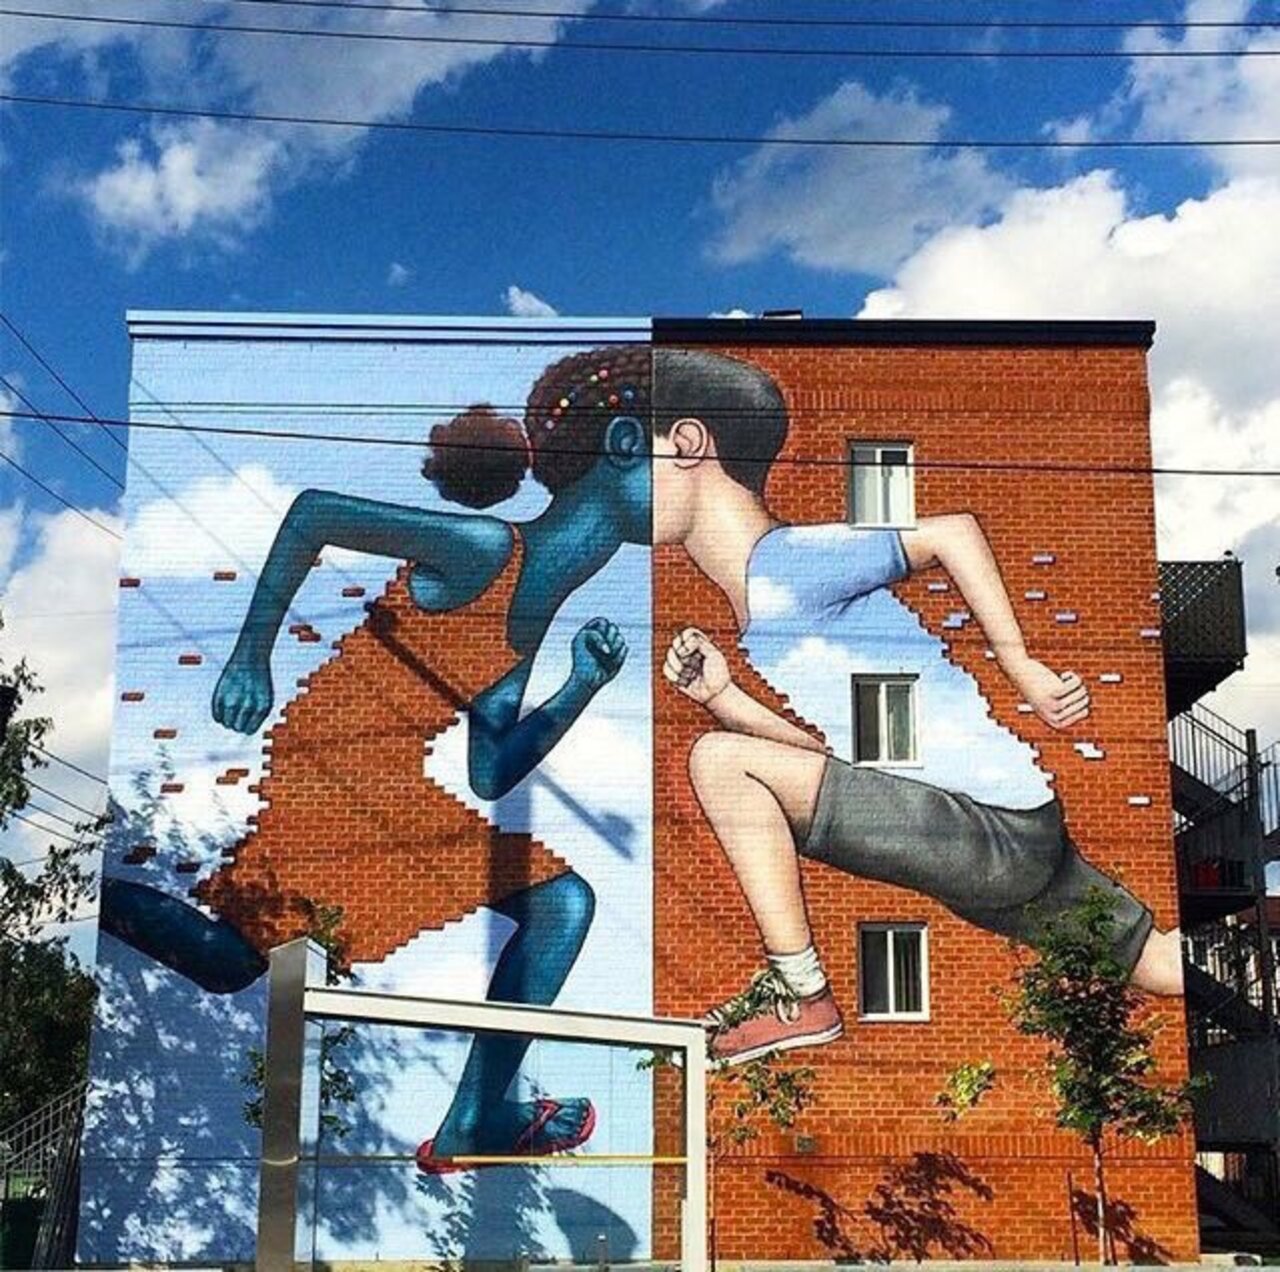 #mural by Seth Globepainter #Montreal #Canada #art #streetart #urbanart #graffiti https://t.co/9mXlx9iMzr